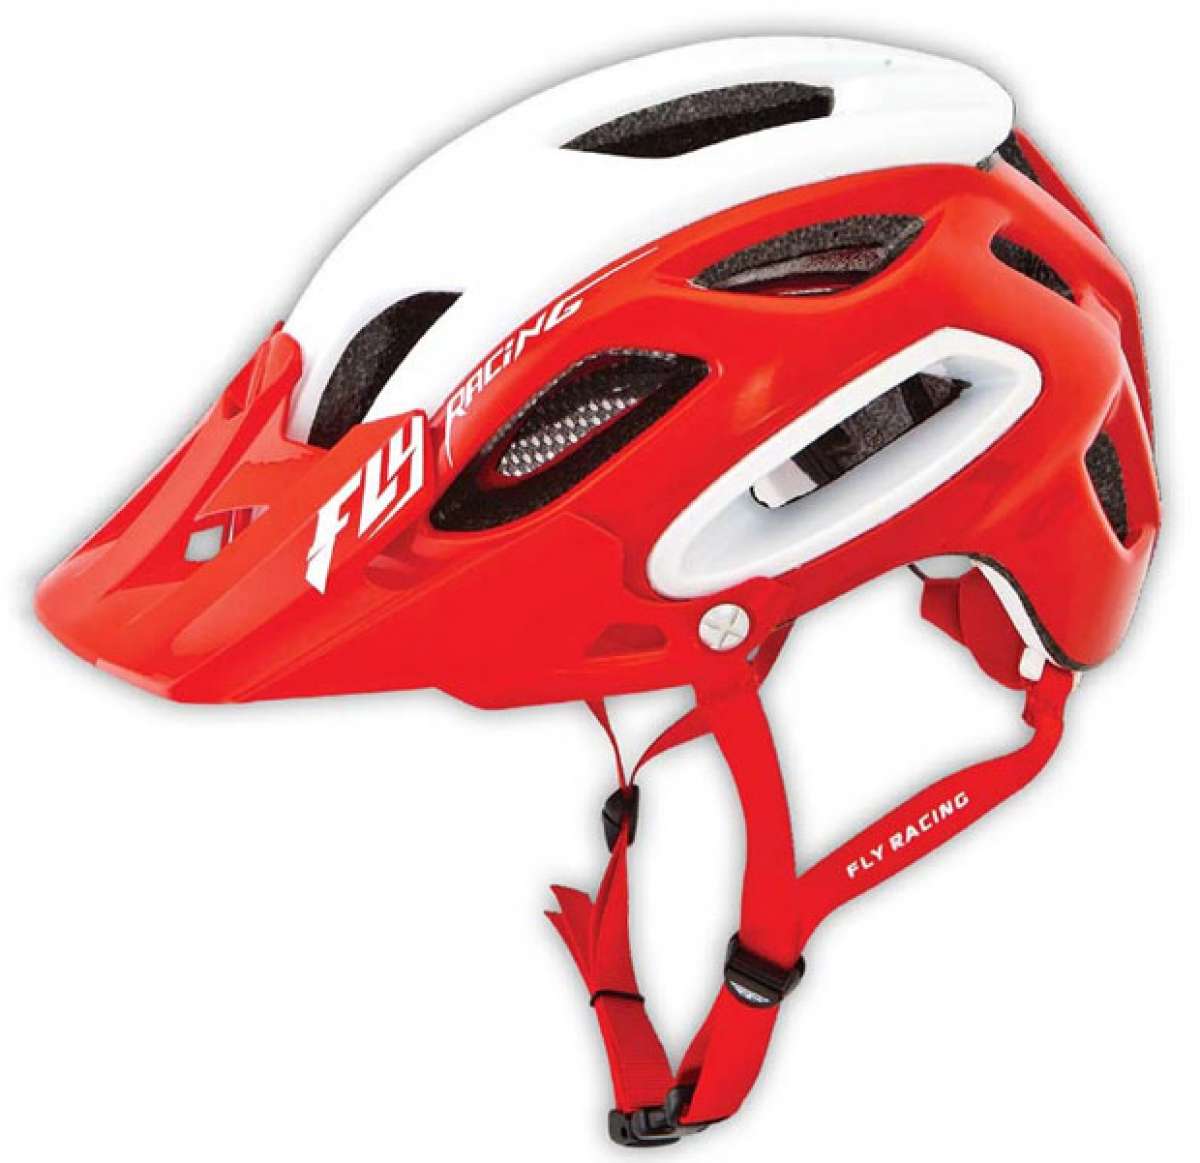 Racing Freestone: primer nuevo) casco para XC/Enduro de Fly Racing